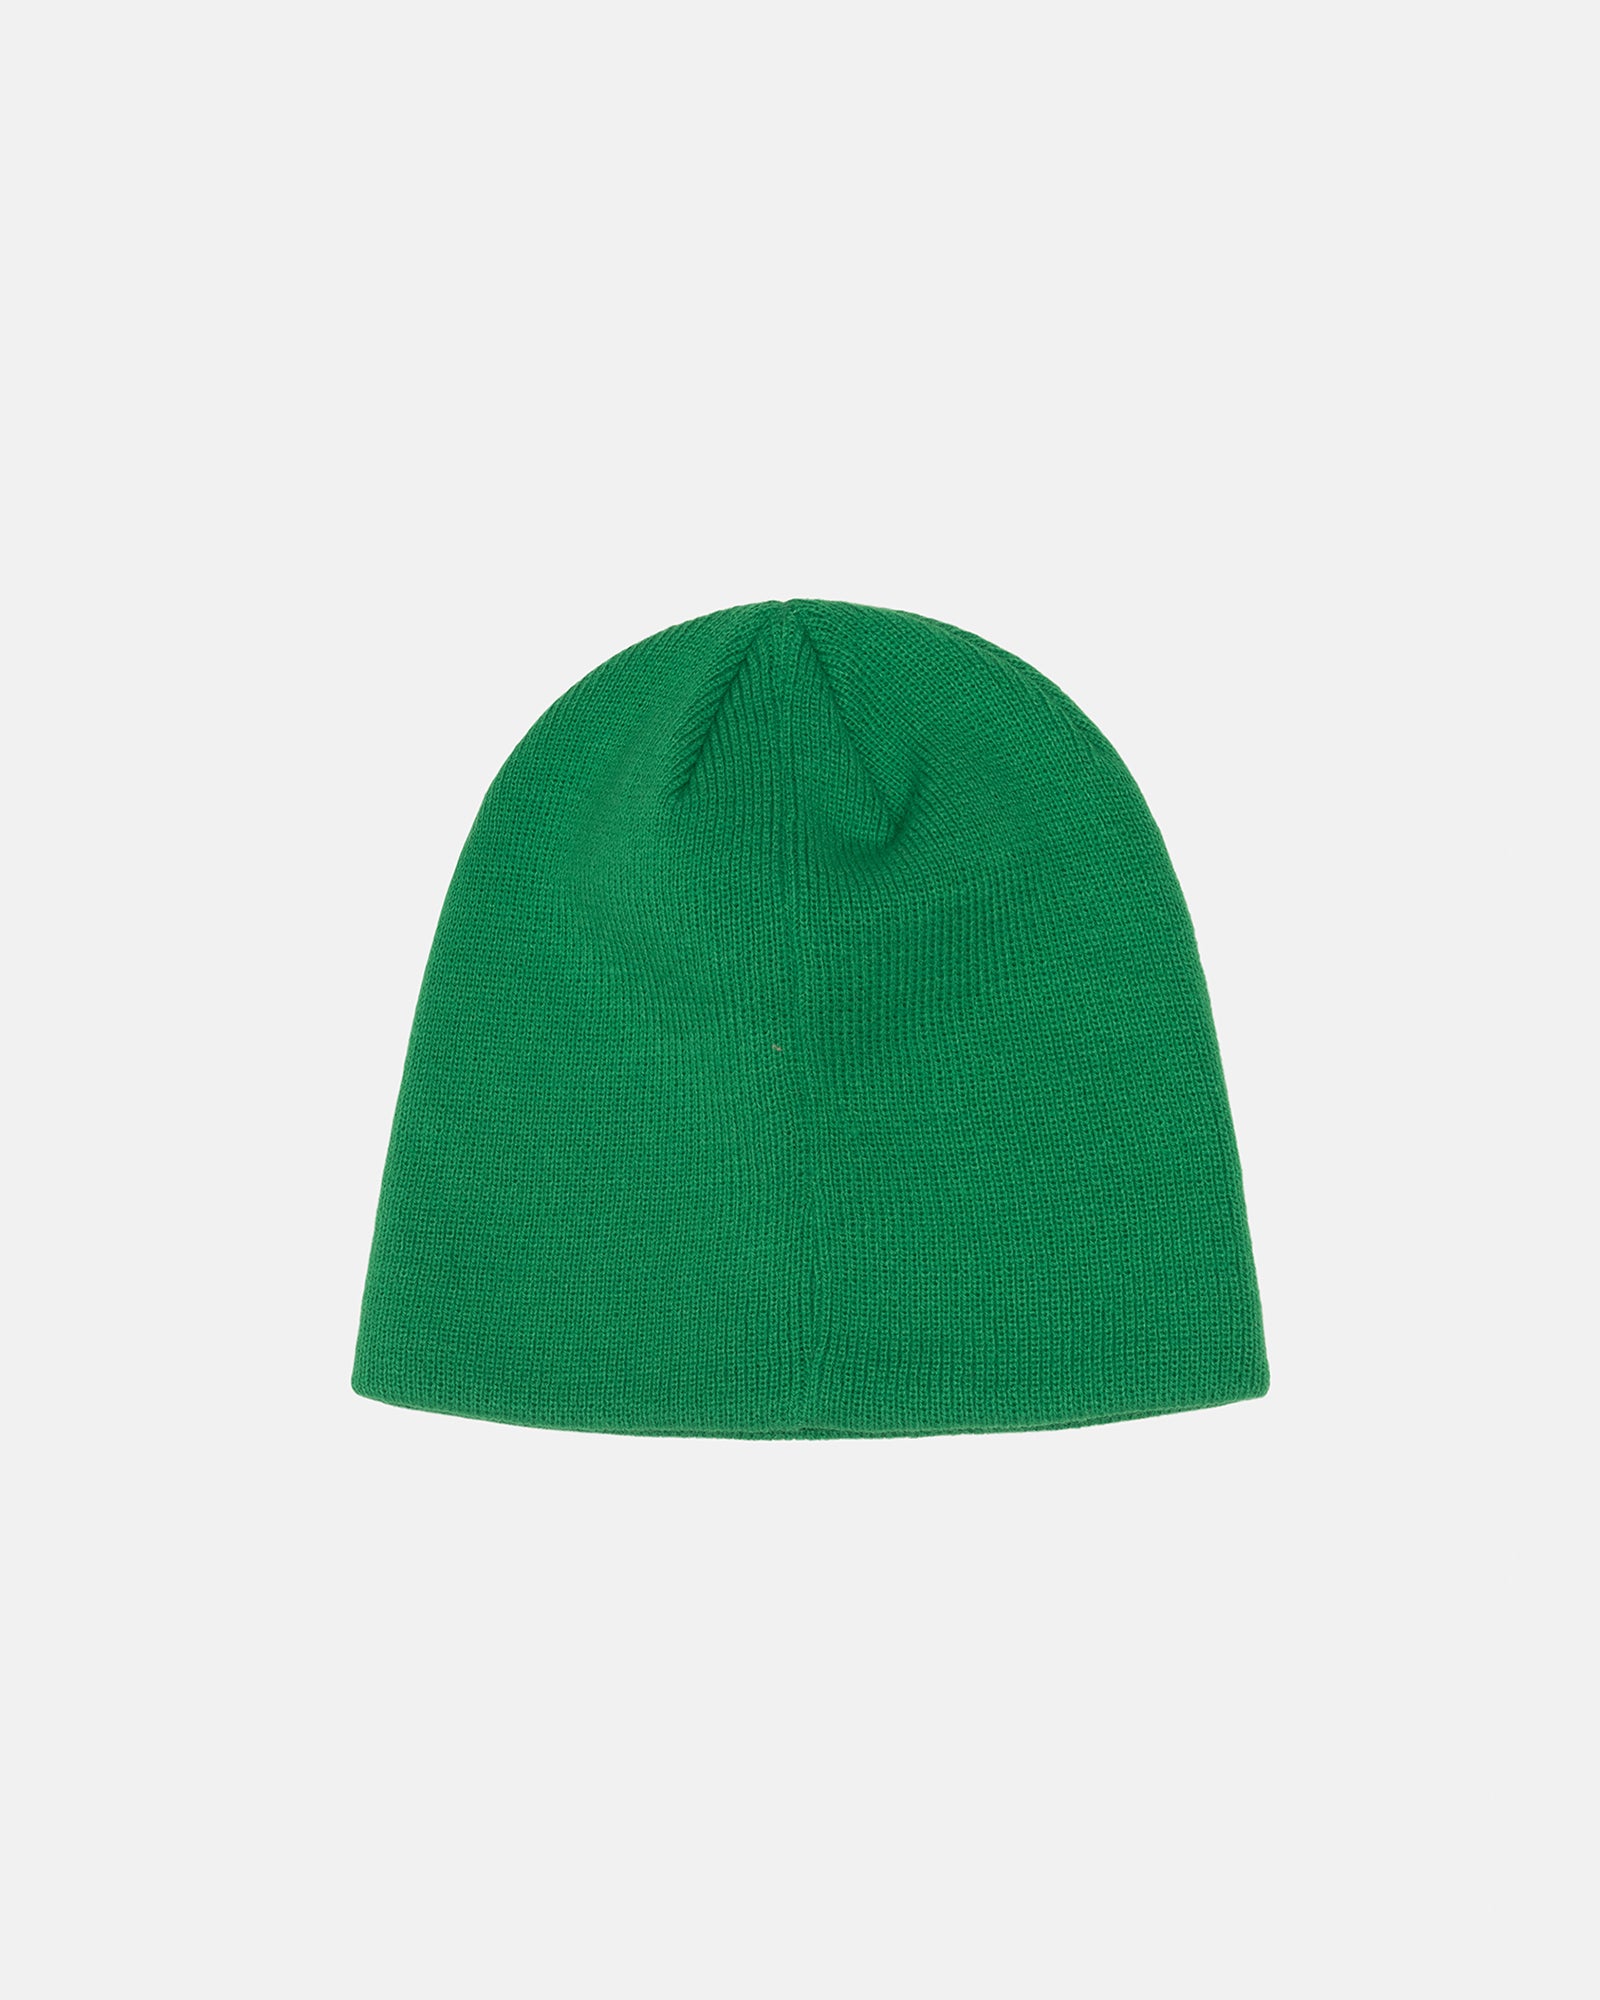 Stüssy Skullcap Burly Threads Green Headwear